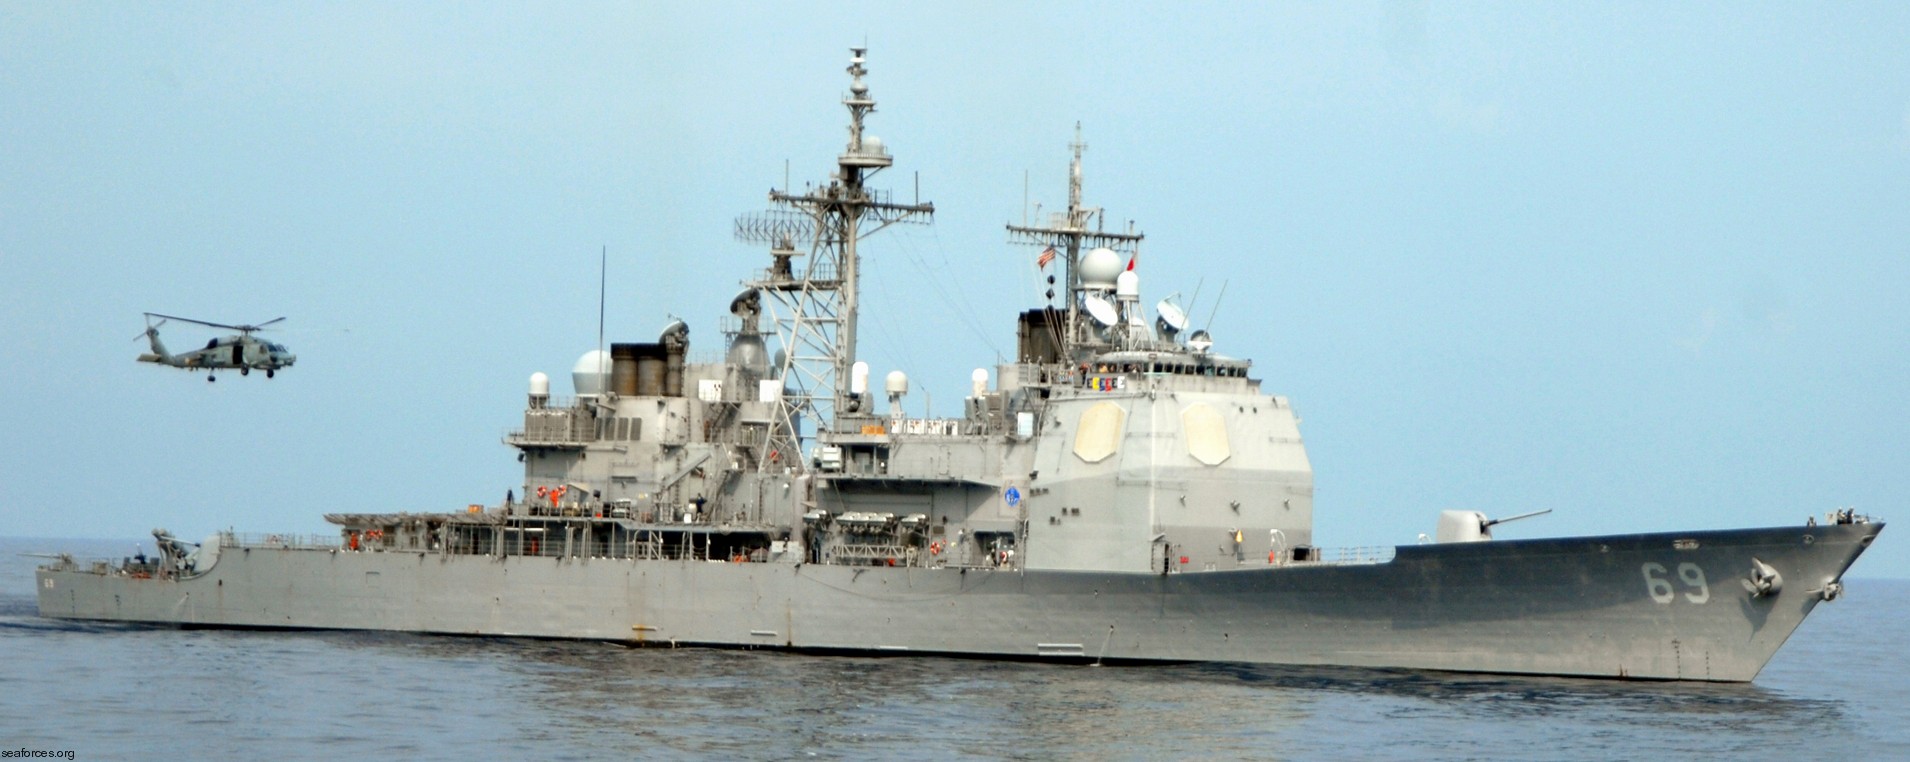 cg-69 uss vicksburg ticonderoga class guided missile cruiser us navy 33